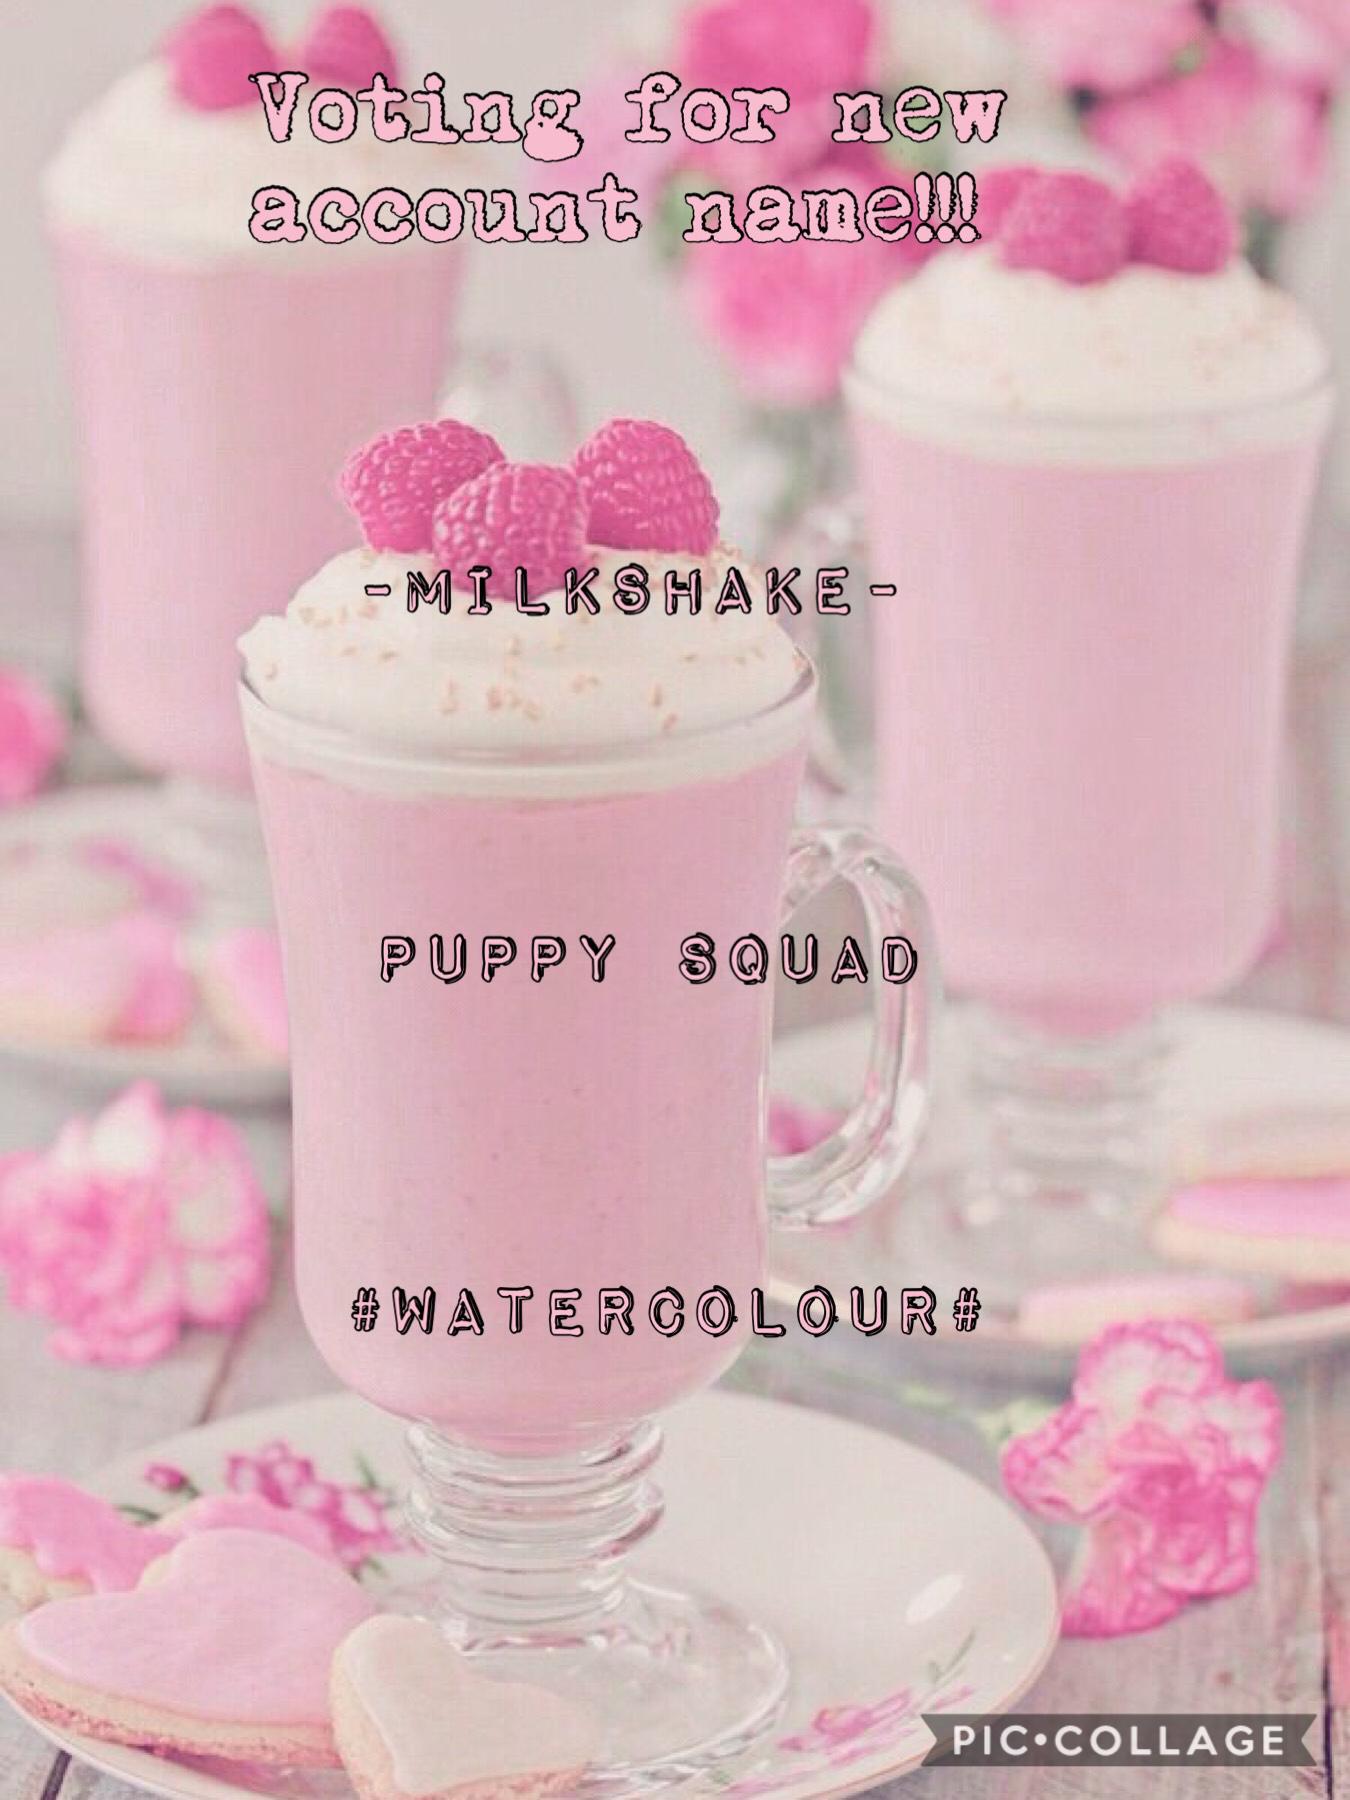 OMG so cute names:) comment 1 for -milkshake-, 2 for puppysquad, 3 for #watercolour#;) Hope u guys like it💖